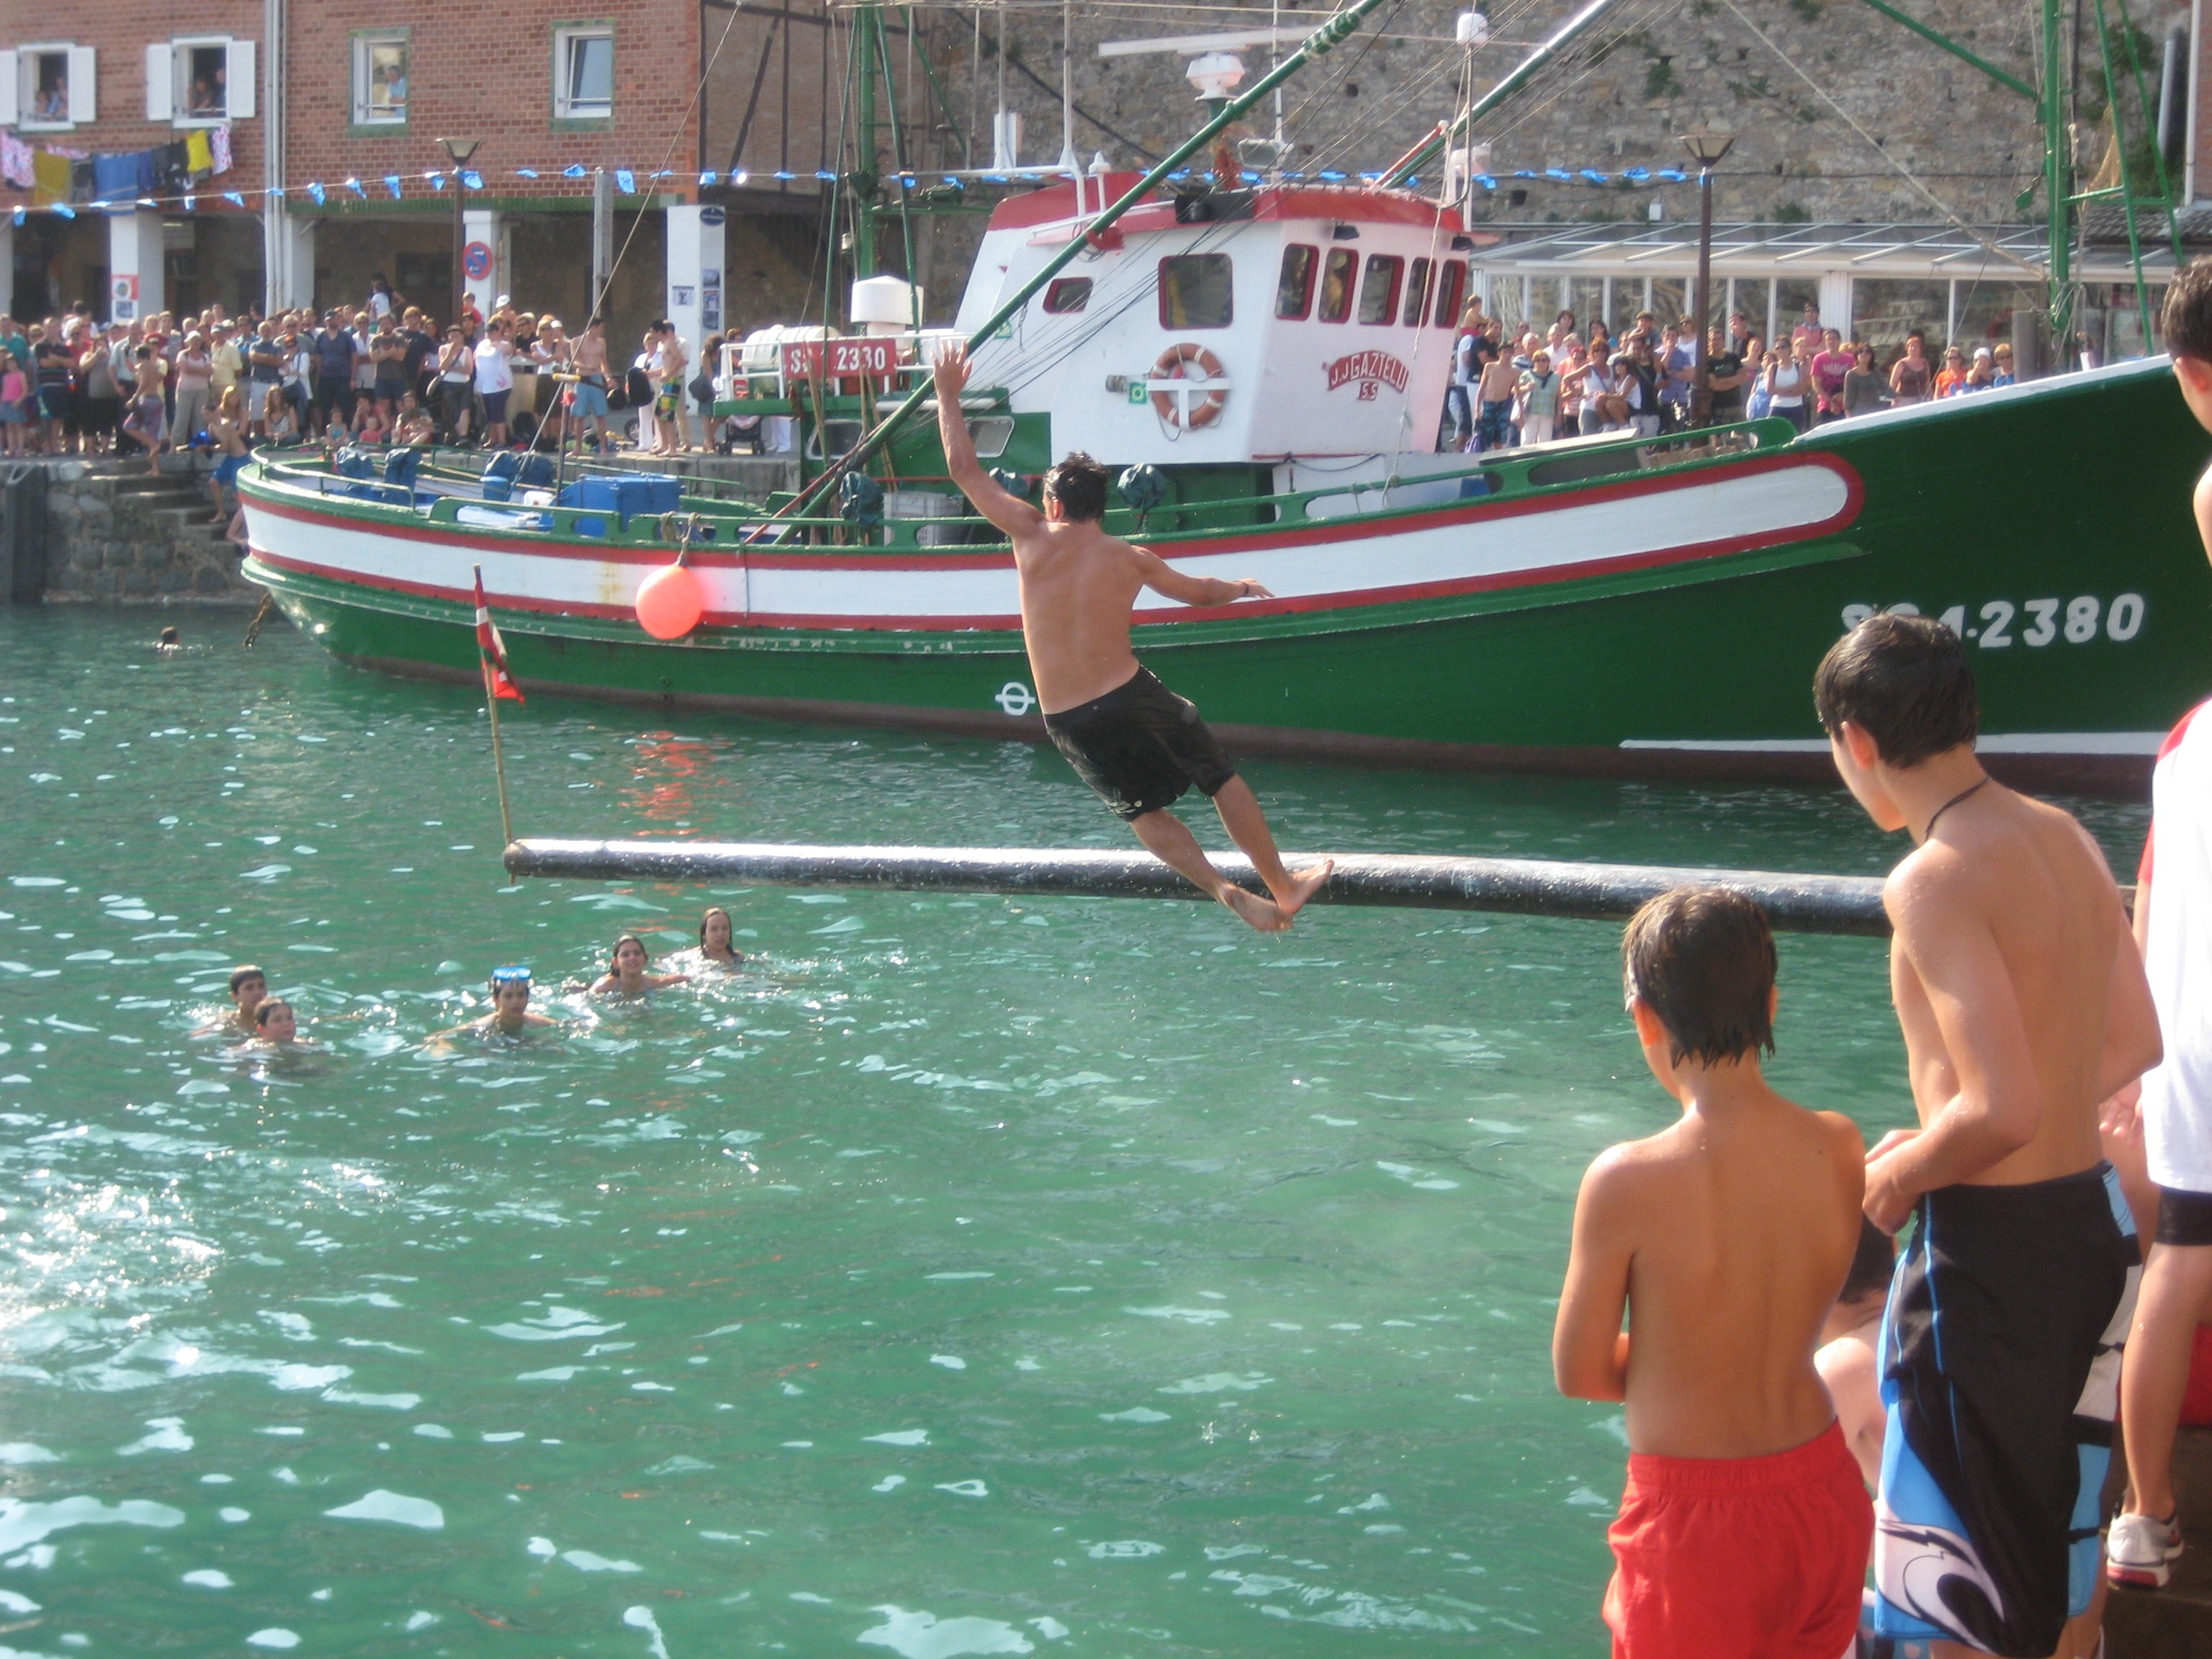 Man falls off greased ships mast during competition at port of San Sebastian